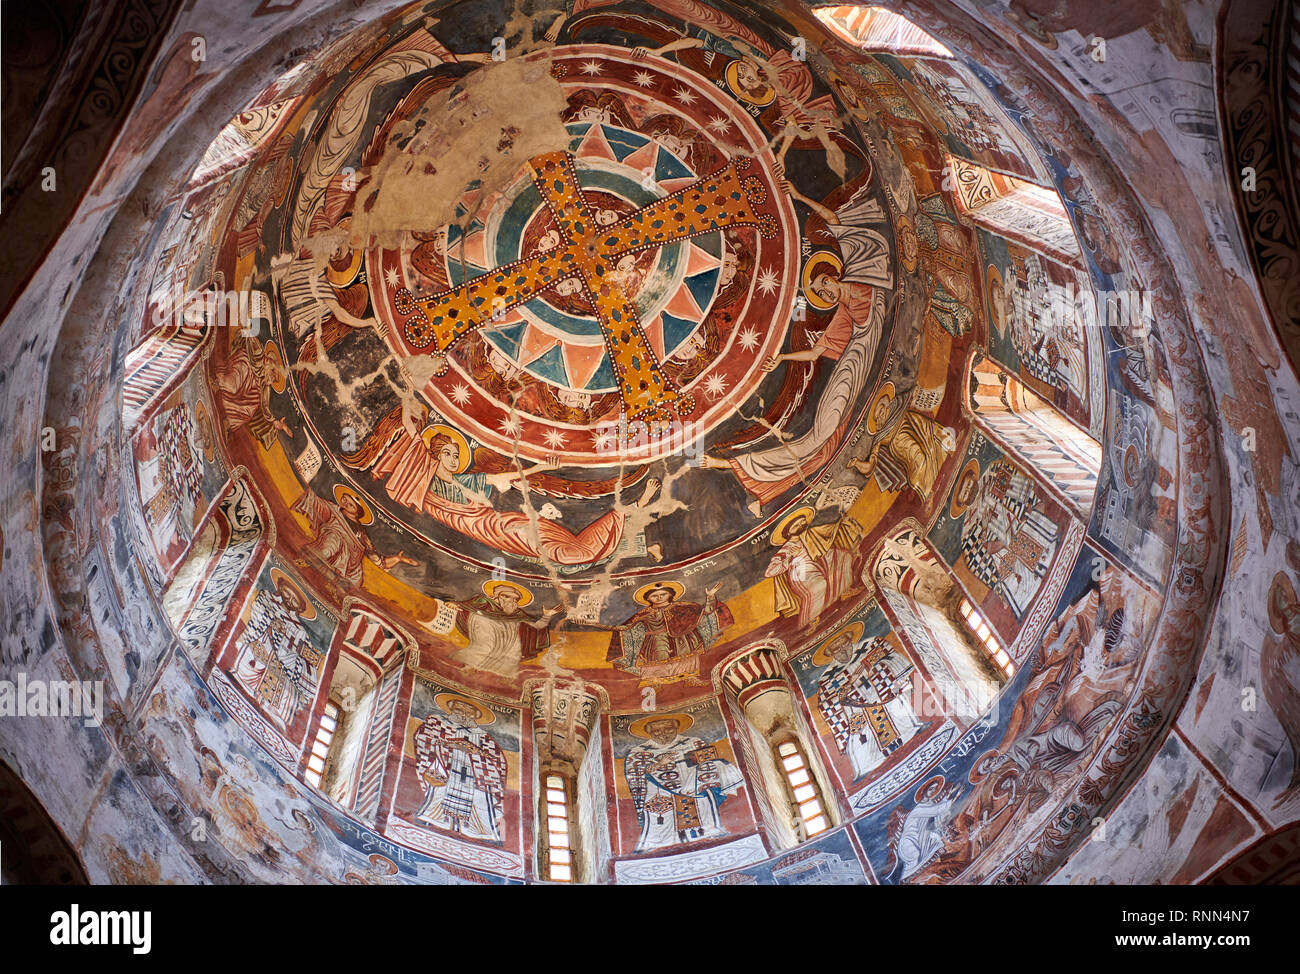 Pictures & images of Nikortsminda ( Nicortsminda ) St Nicholas Georgian Orthodox Cathedral rich interior frescoes of the cupola dome, 16th century, Ni Stock Photo